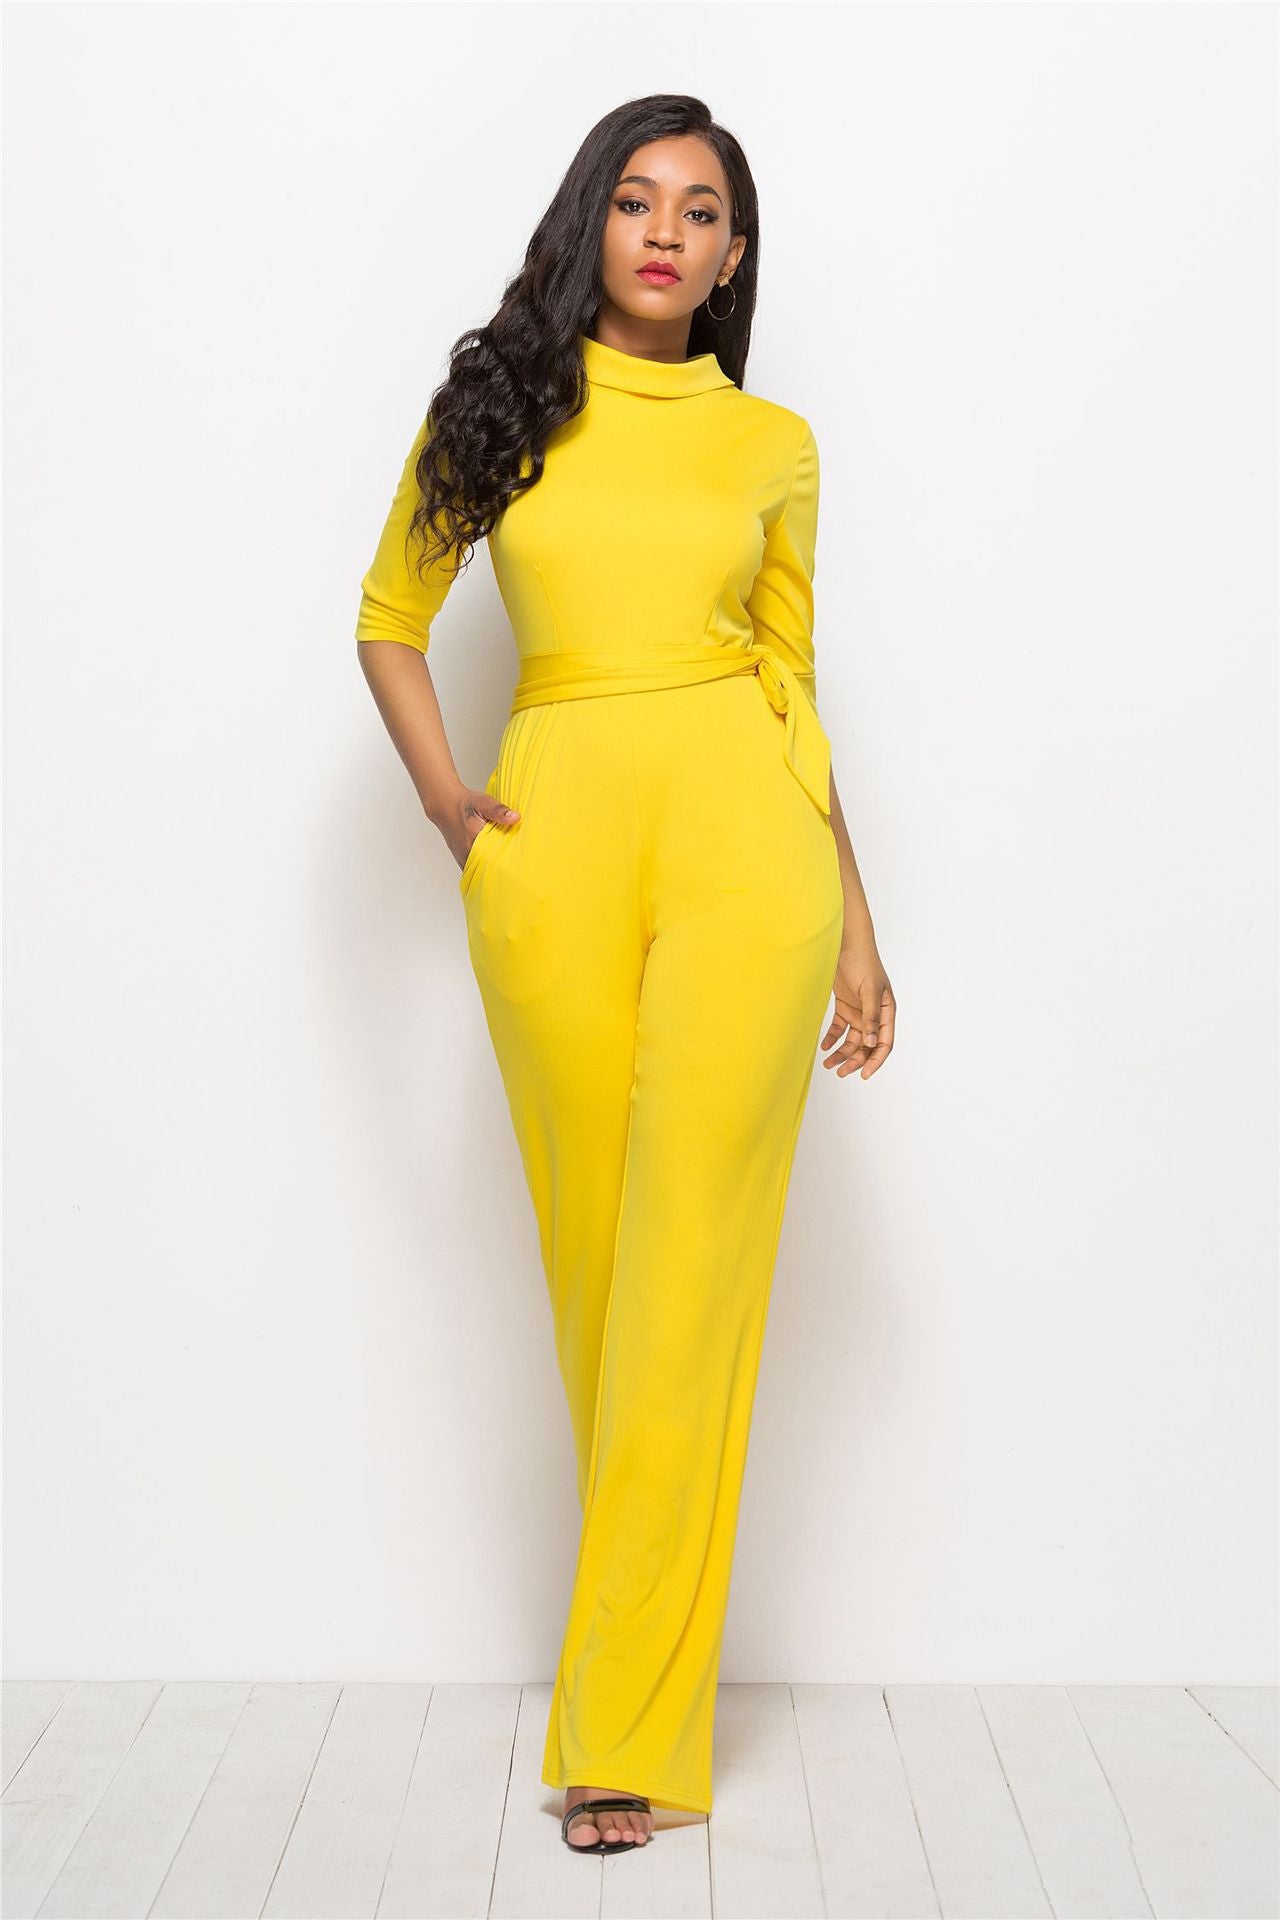 Sexy Fashion Women Fall Jumspuits-Women Suits-Yellow-S-Free Shipping at meselling99